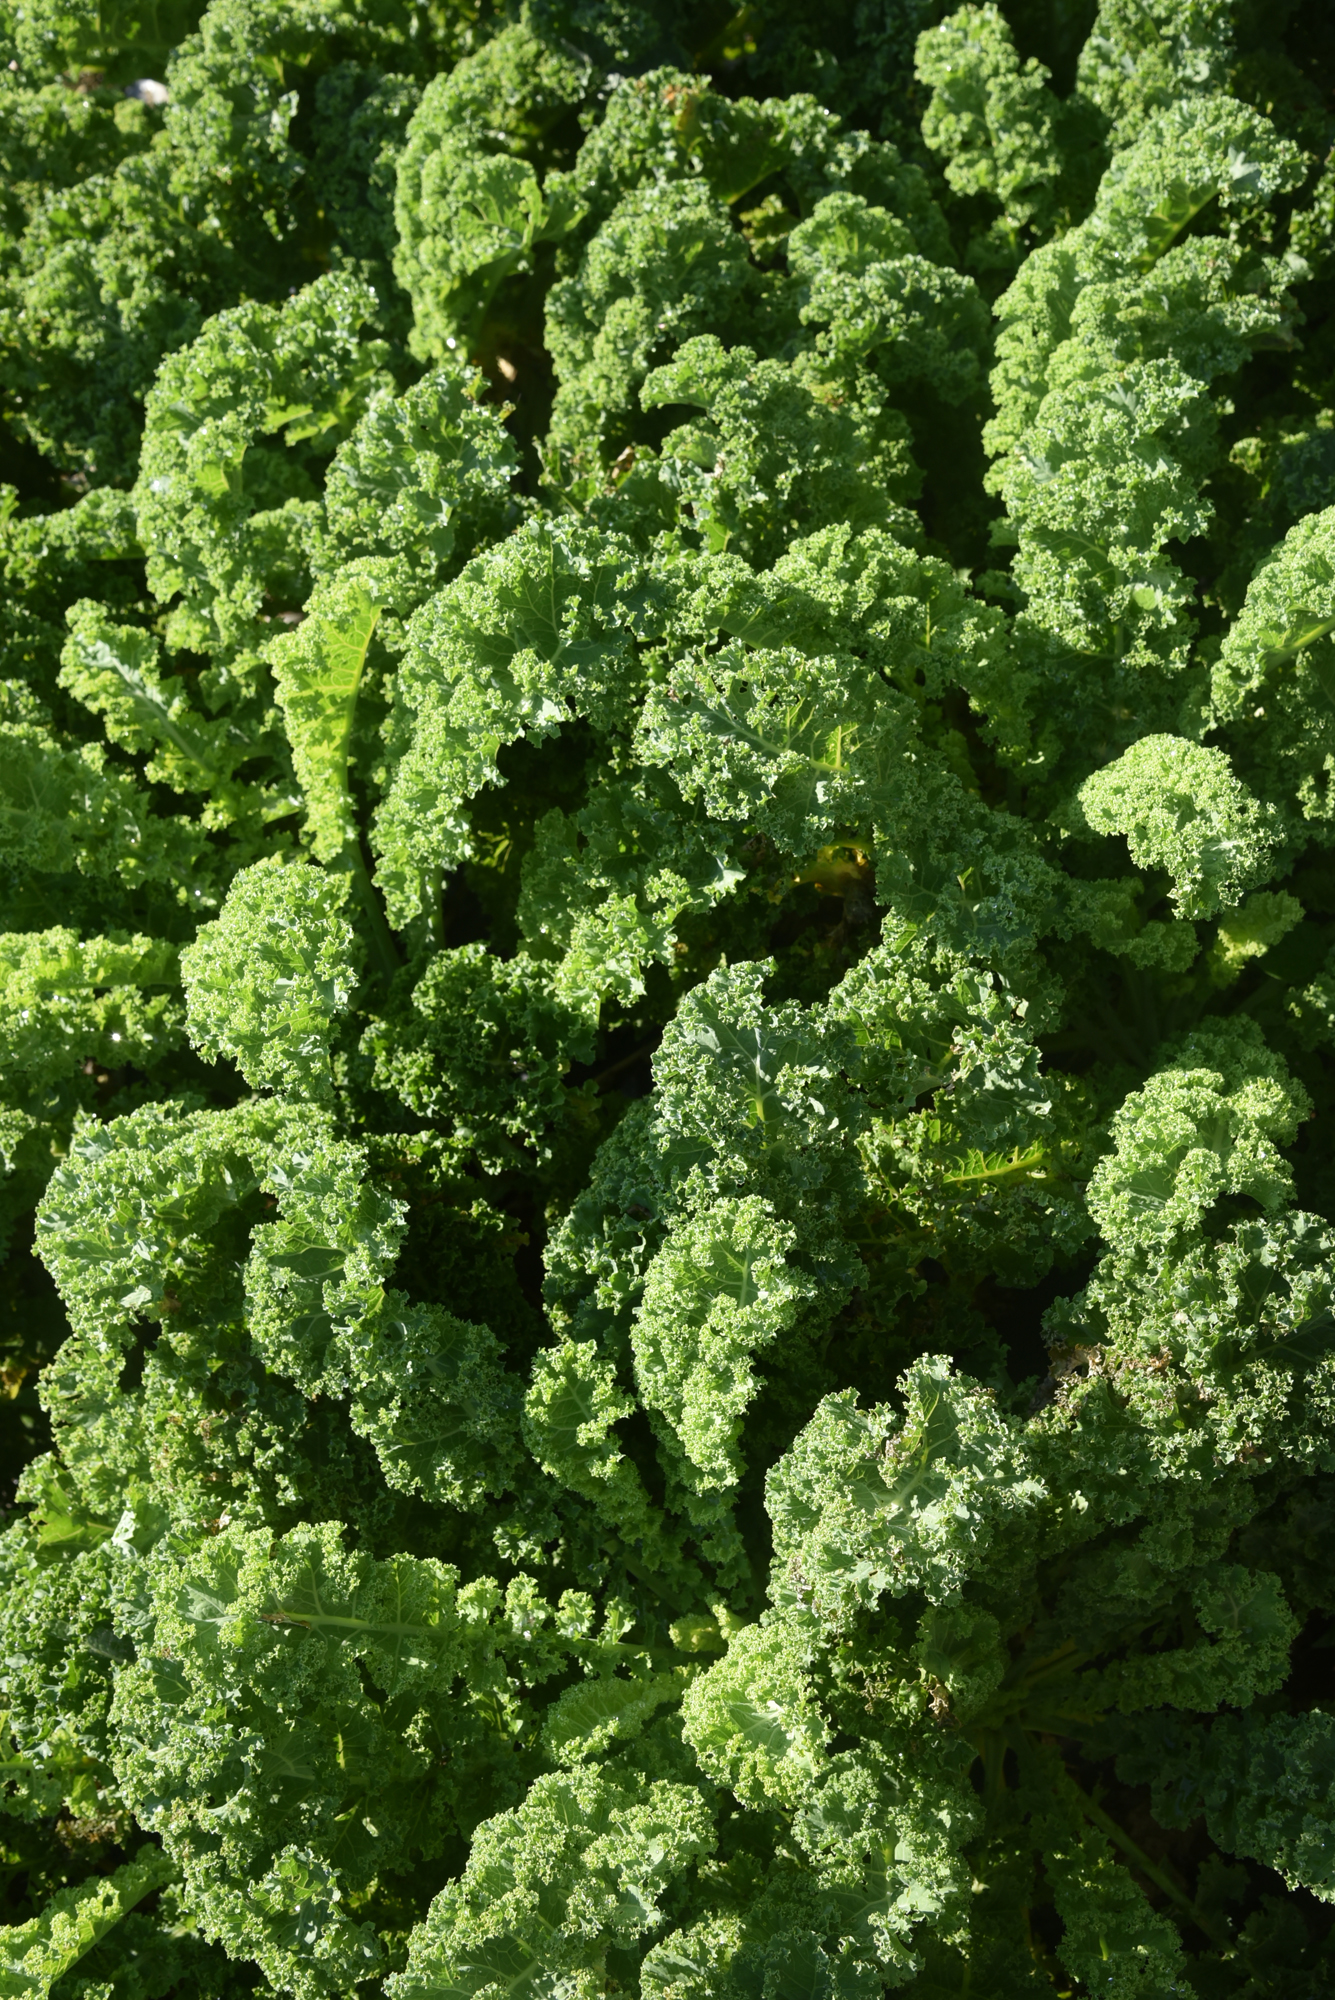 Kale in the Garden